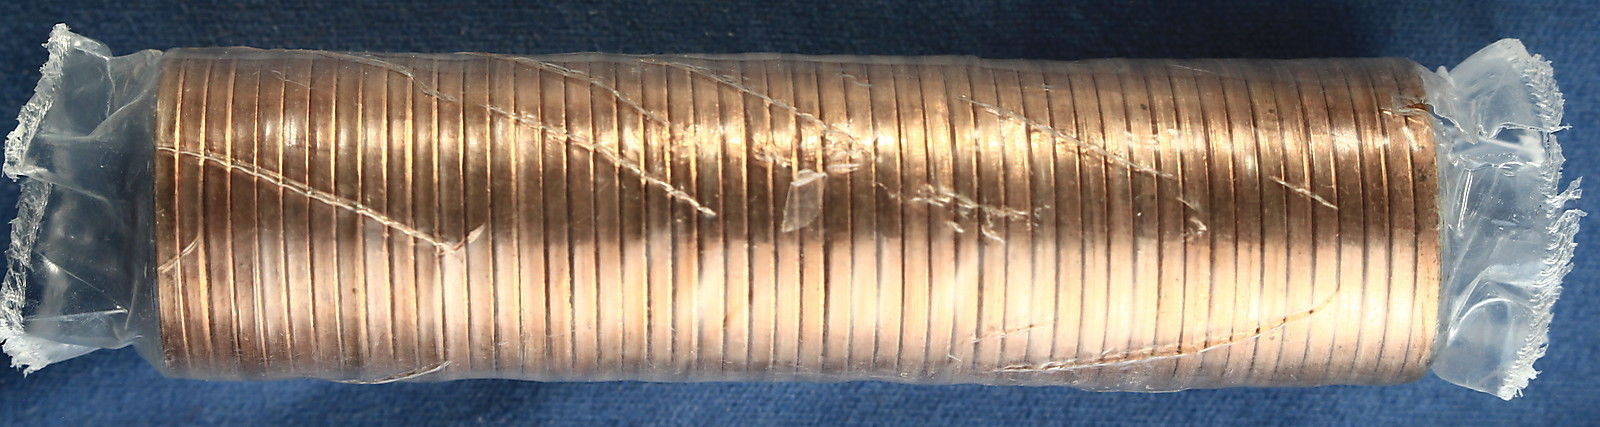 Canada 1997 Original Mint Roll of Pennies   1